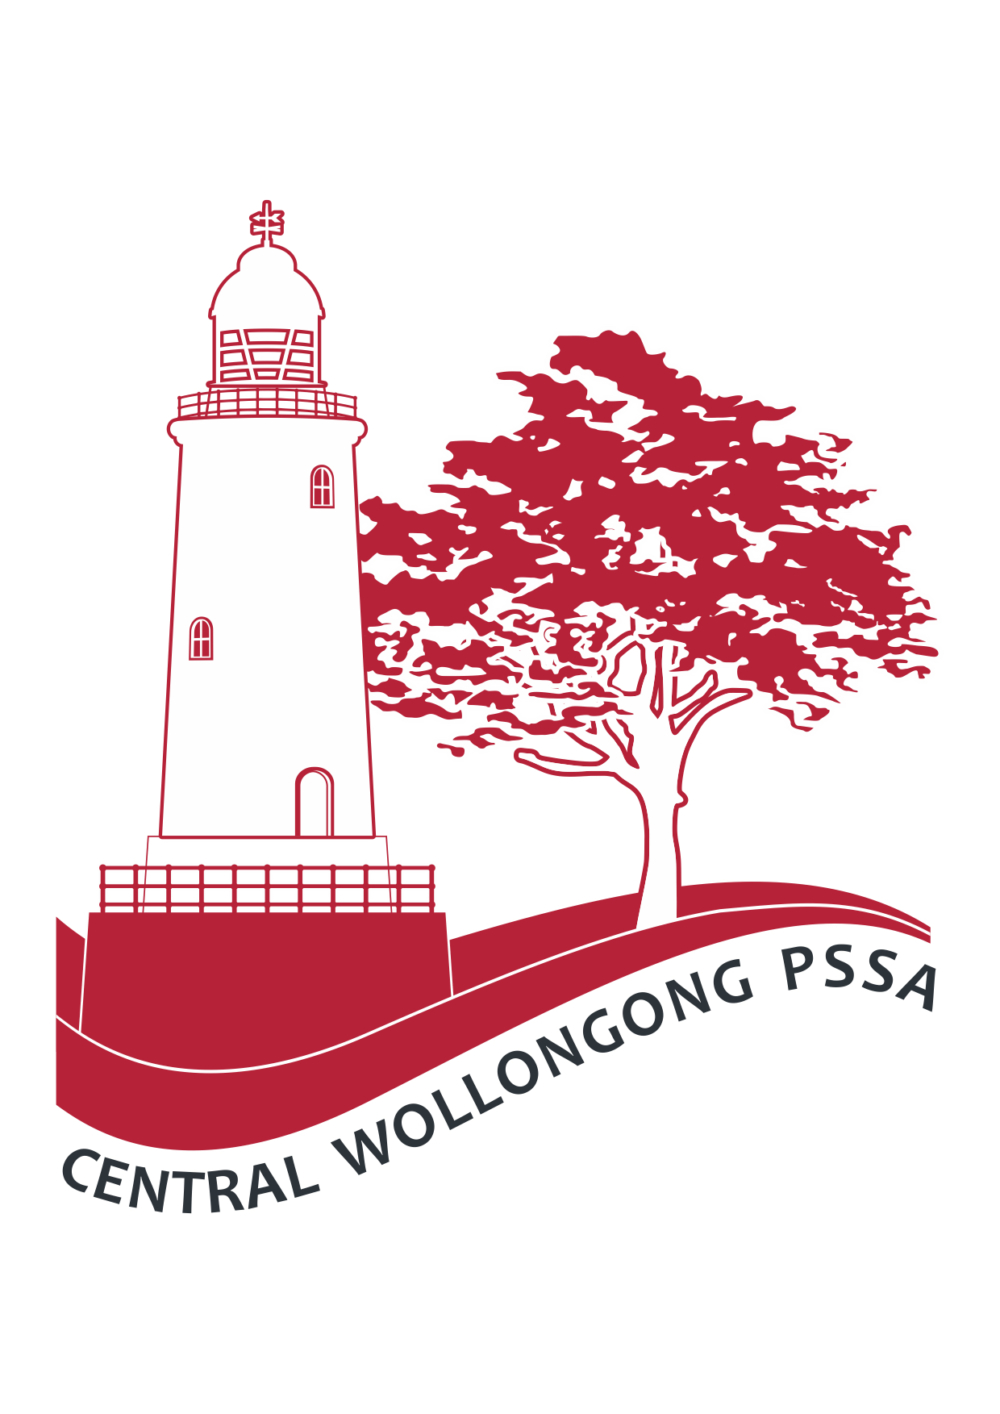 Central Wollongong PSSA